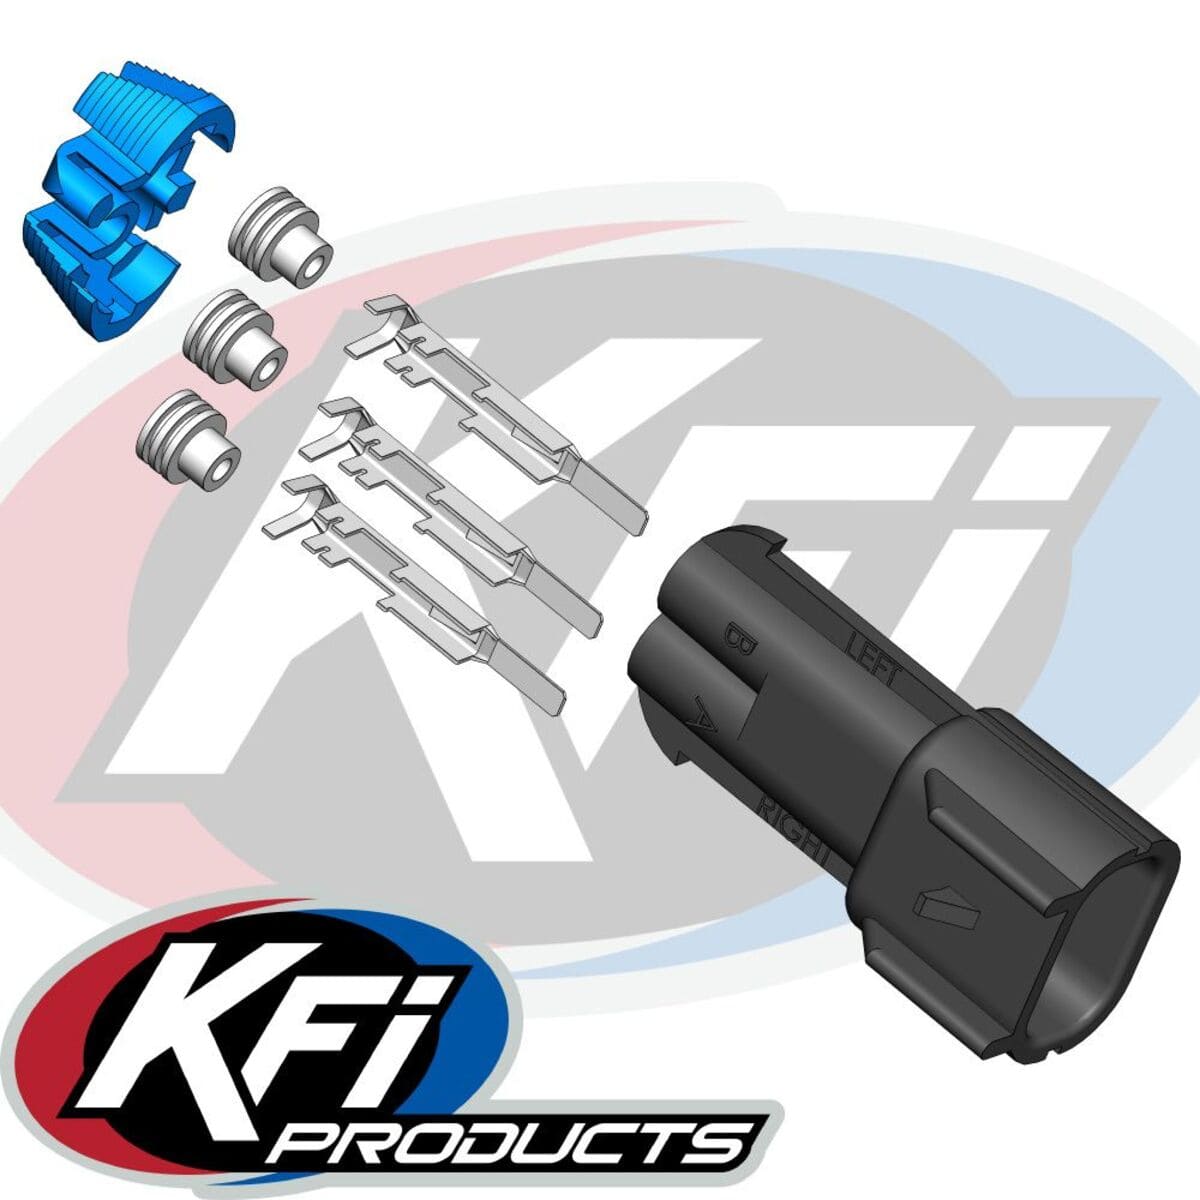 KFI Actuator Replacement Plug-Male